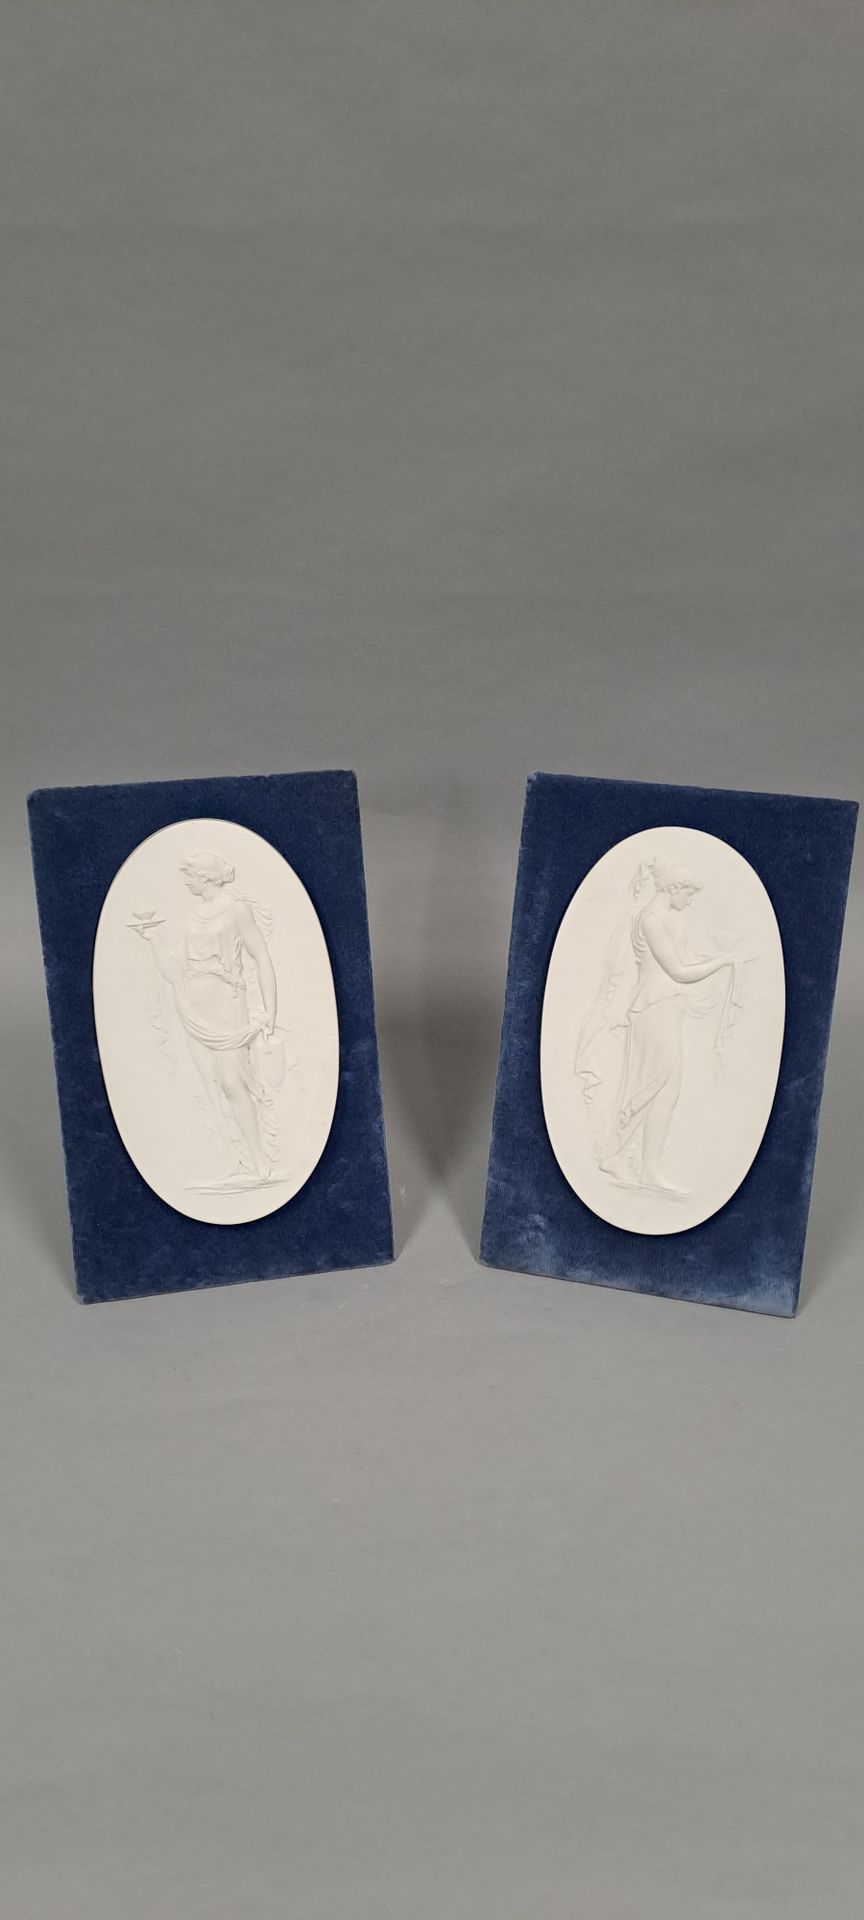 Null ǞǞǞ
一对塞夫勒瓷器中的椭圆形奖章，带有仿古装饰。安装在一个用蓝色天鹅绒覆盖的画架上，背面印有 "塞夫勒国家制造 "的字样。 
尺寸：21.20 x&hellip;